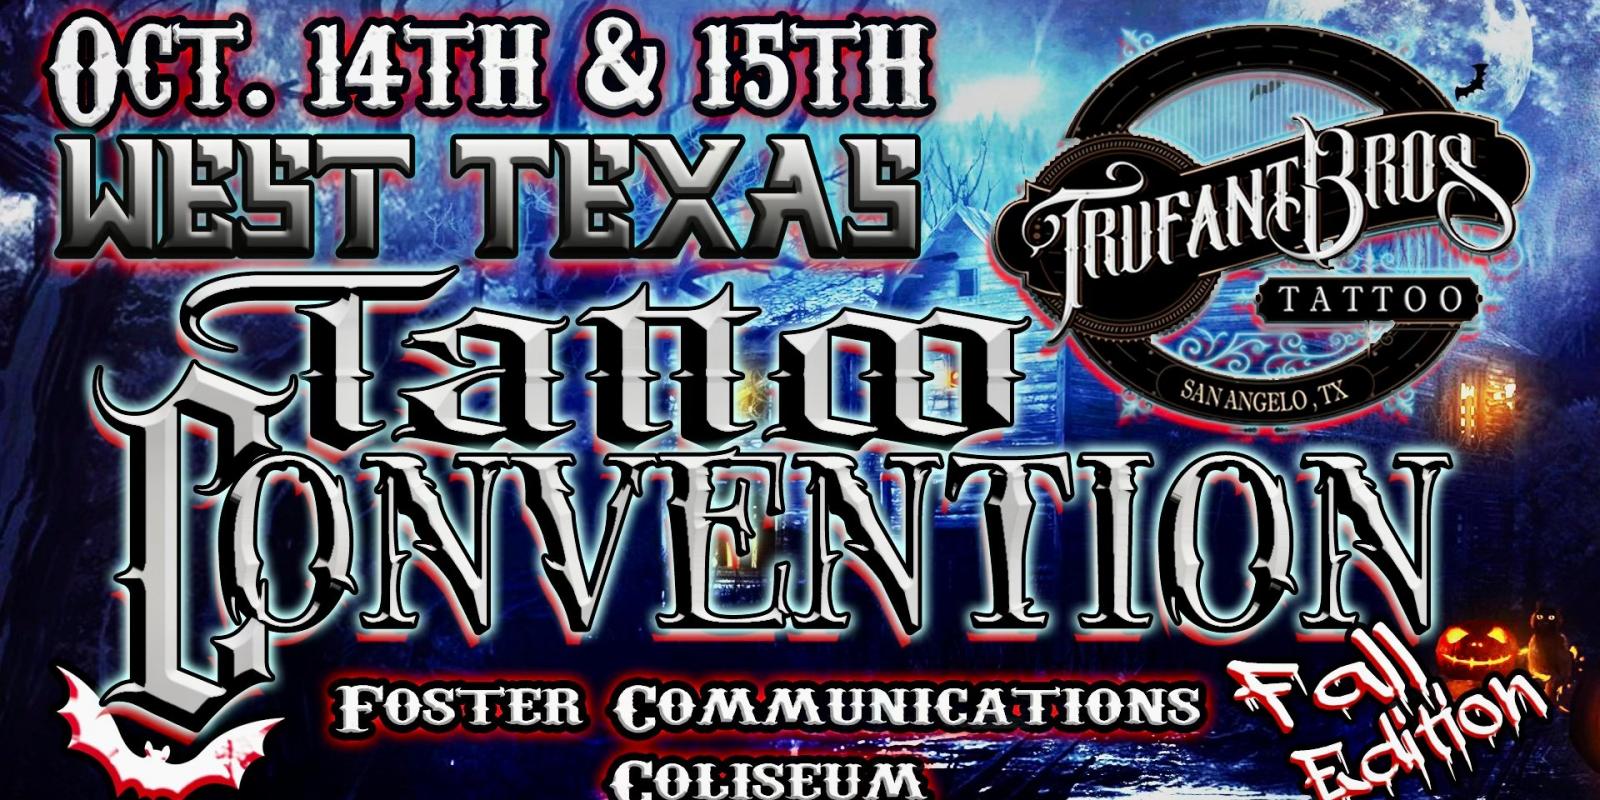 West Texas Tattoo Convention kicks off  myfoxzonecom